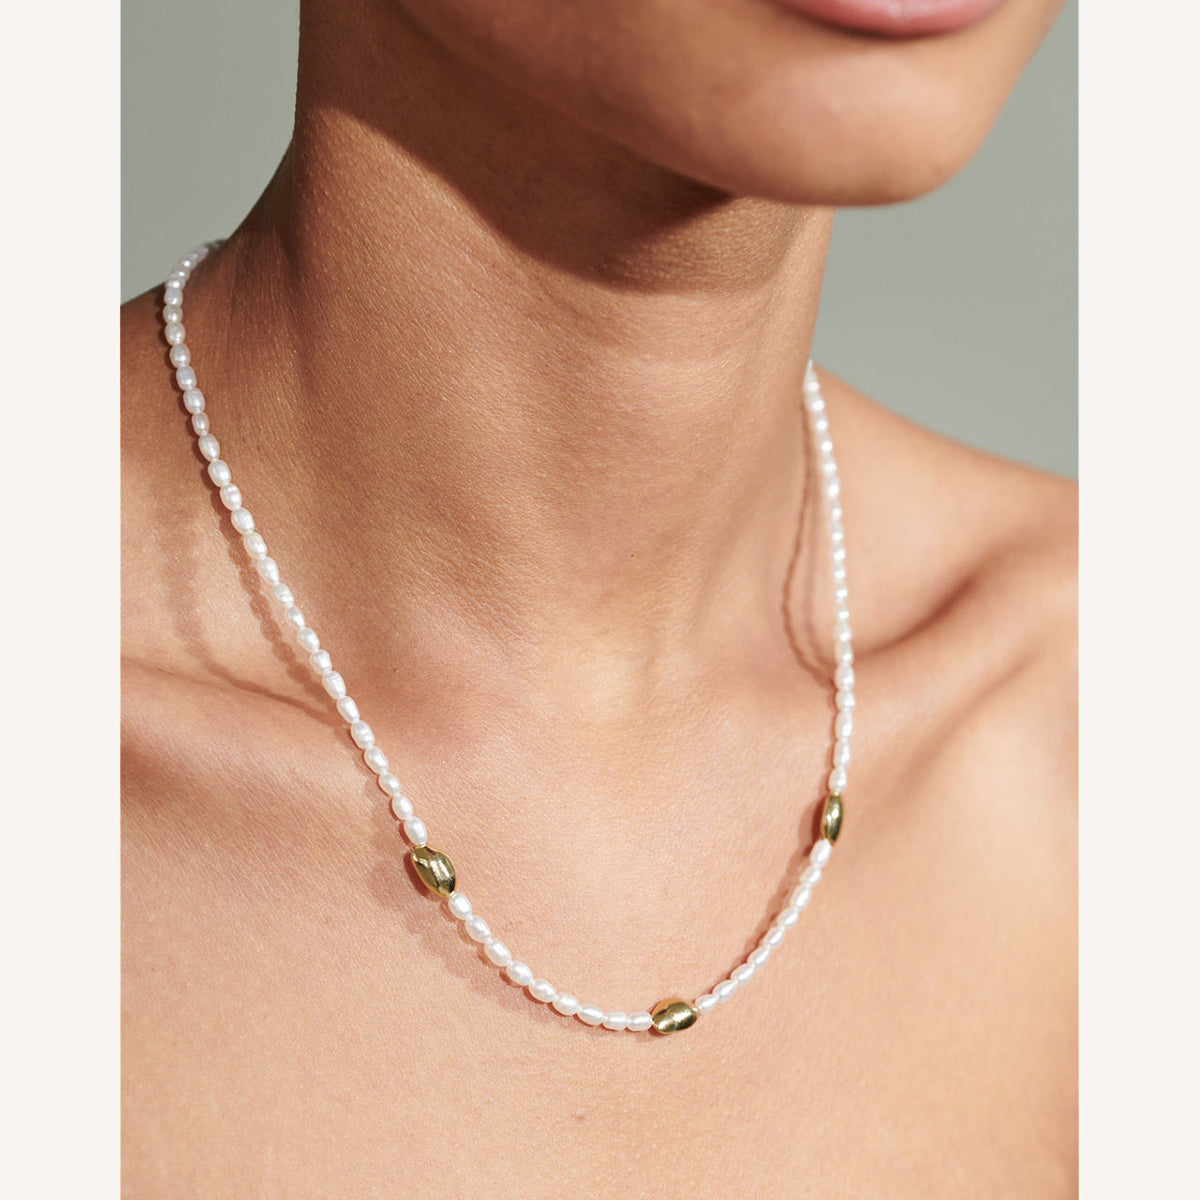 C.W. James Celeste pearl necklace on model close up